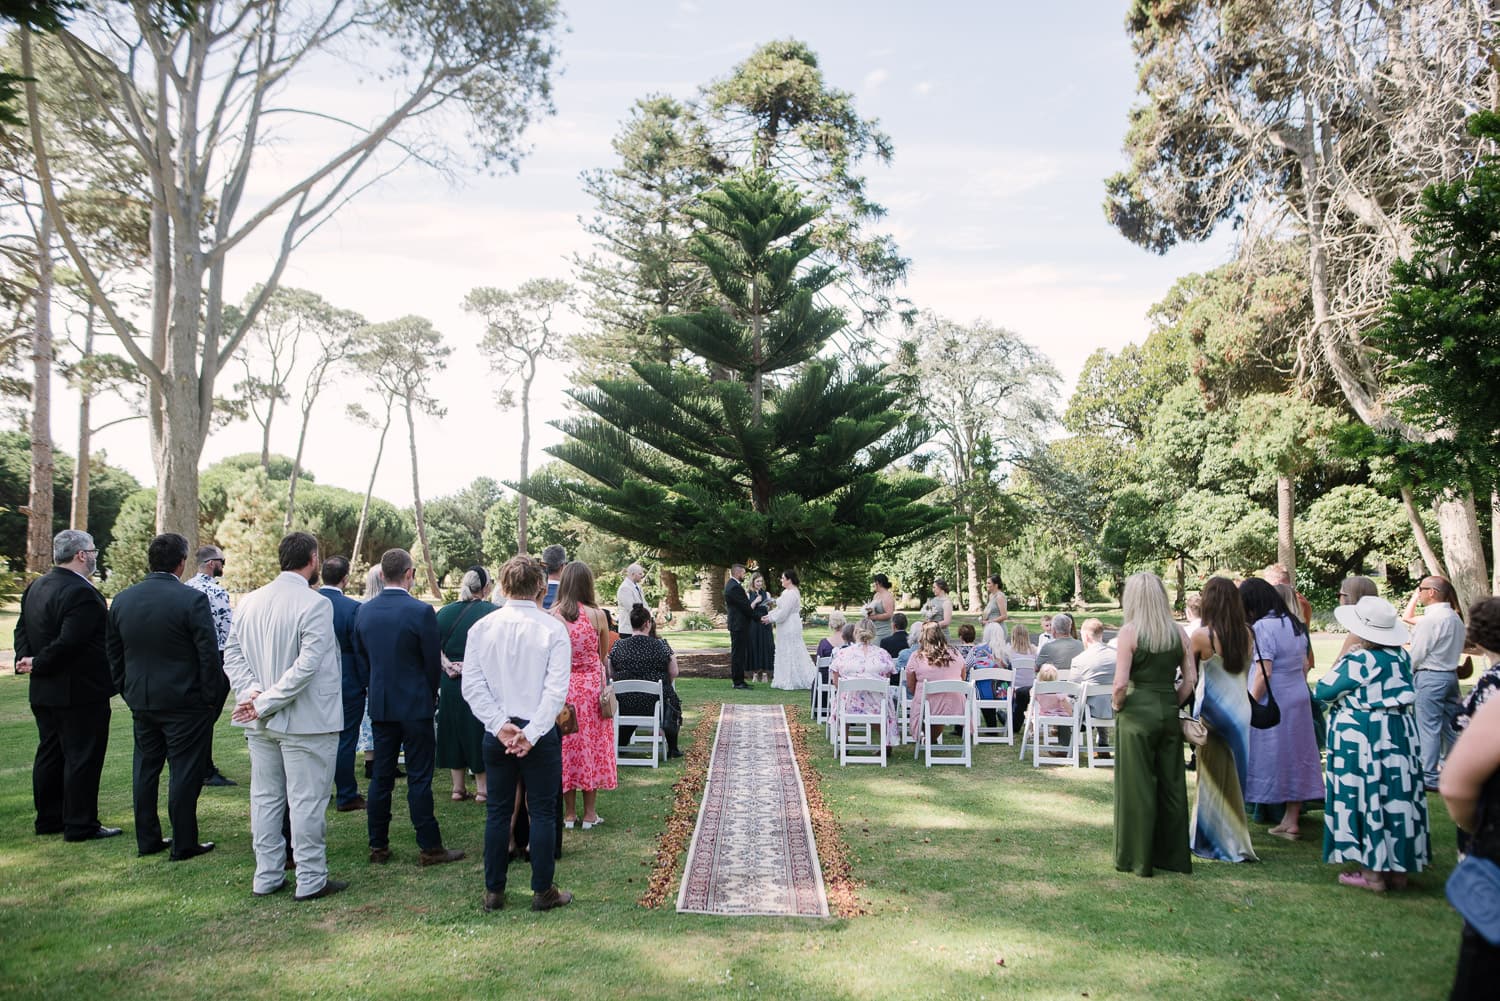 Warrnambool Botanic Gardens wedding ceremony outdoors